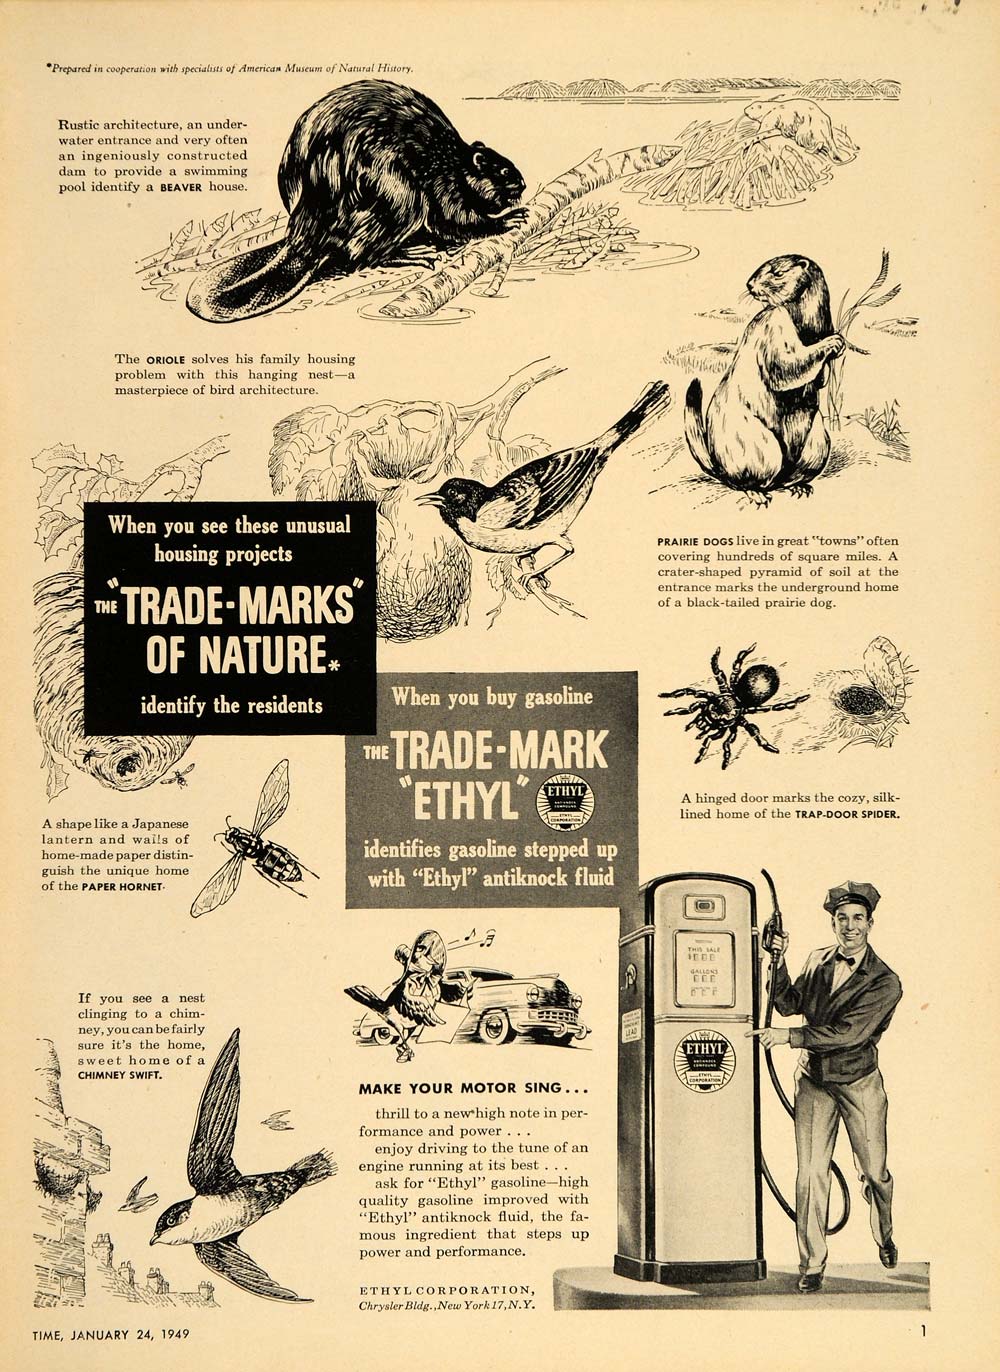 1949 Ad Ethyl Gas Beaver Prairie Dog Trap Door Spider - ORIGINAL ADVERTISING TM1